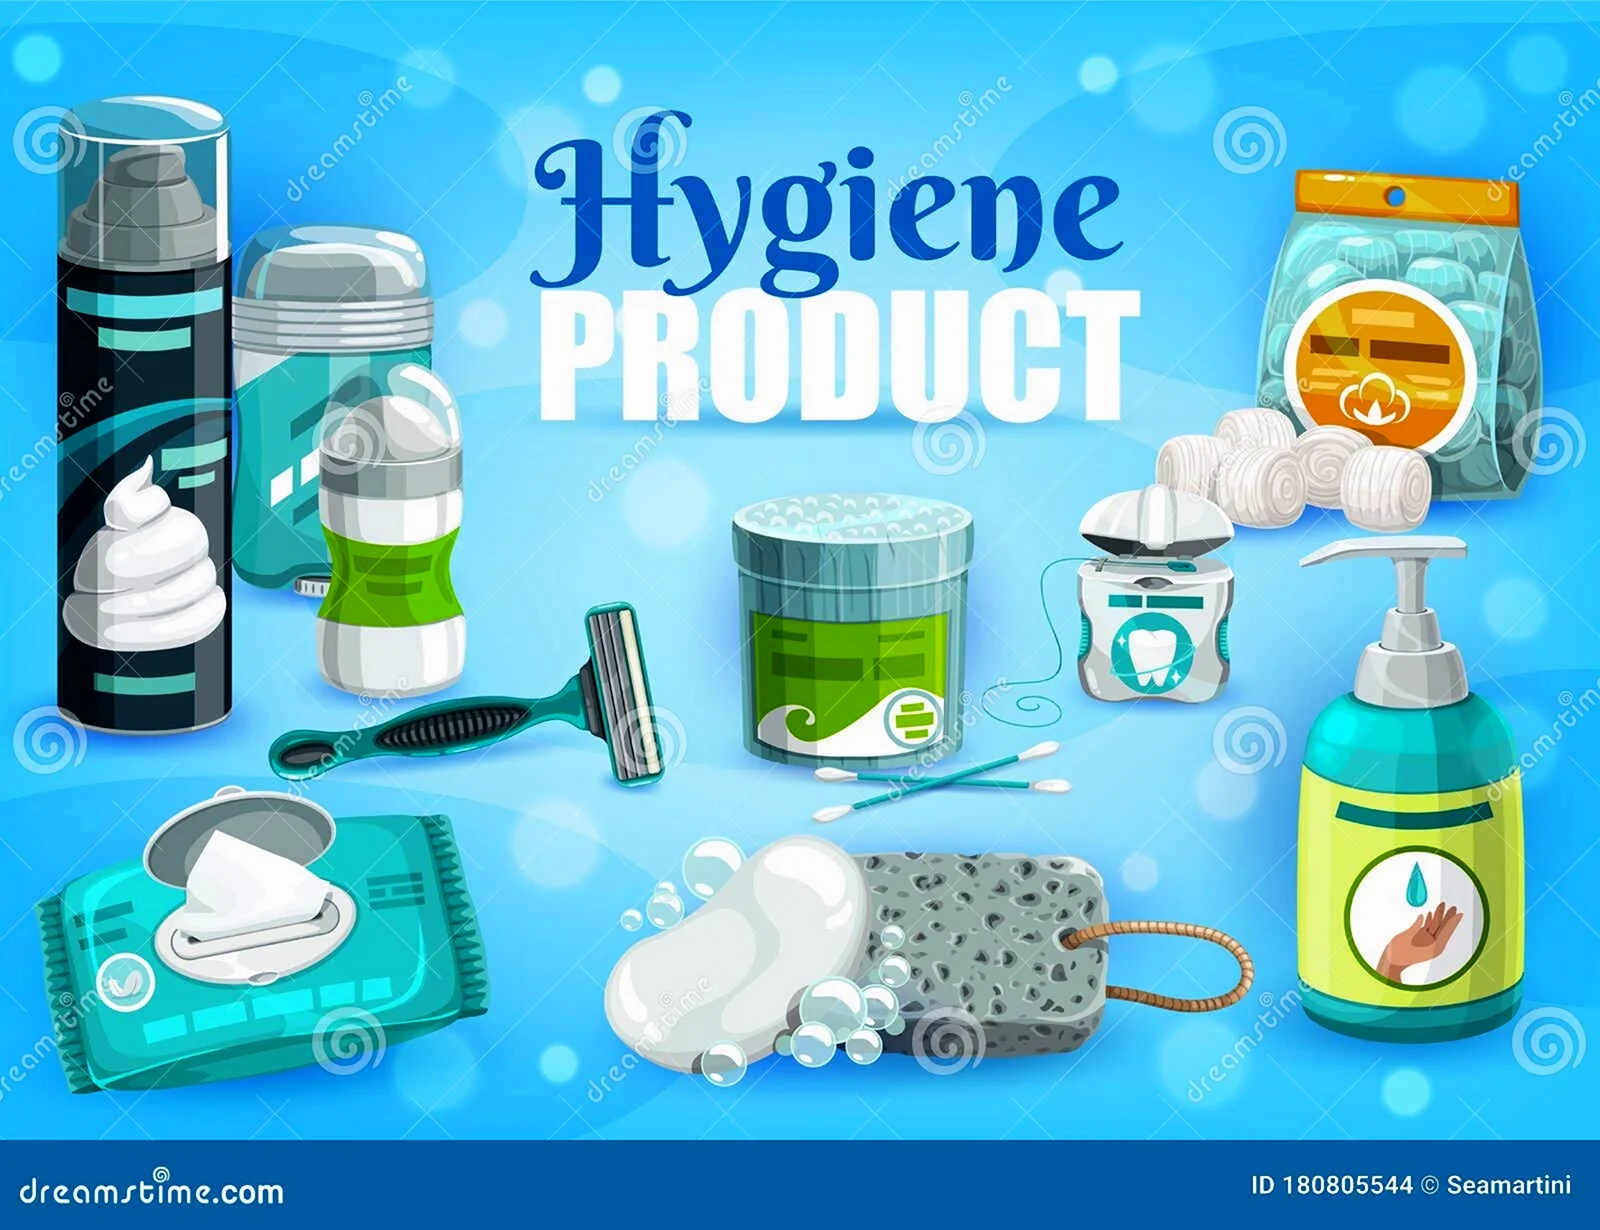 Hygiene products men